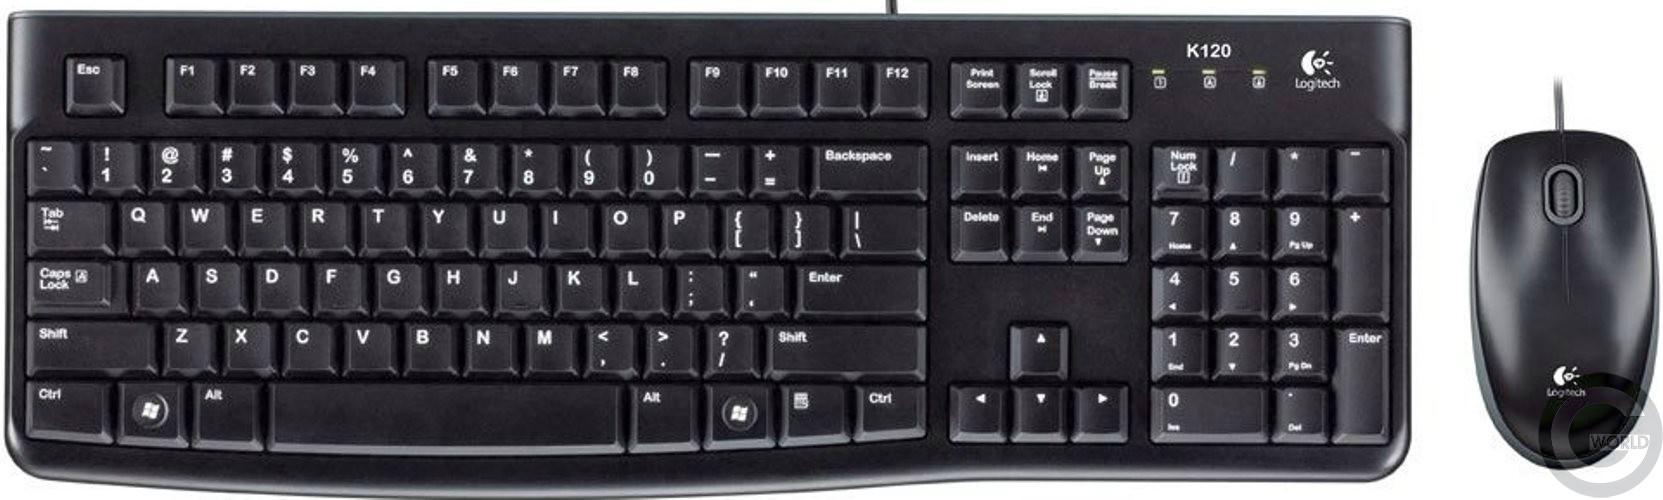 Комплект Logitech Wireless keyboard desktop mk120, Black